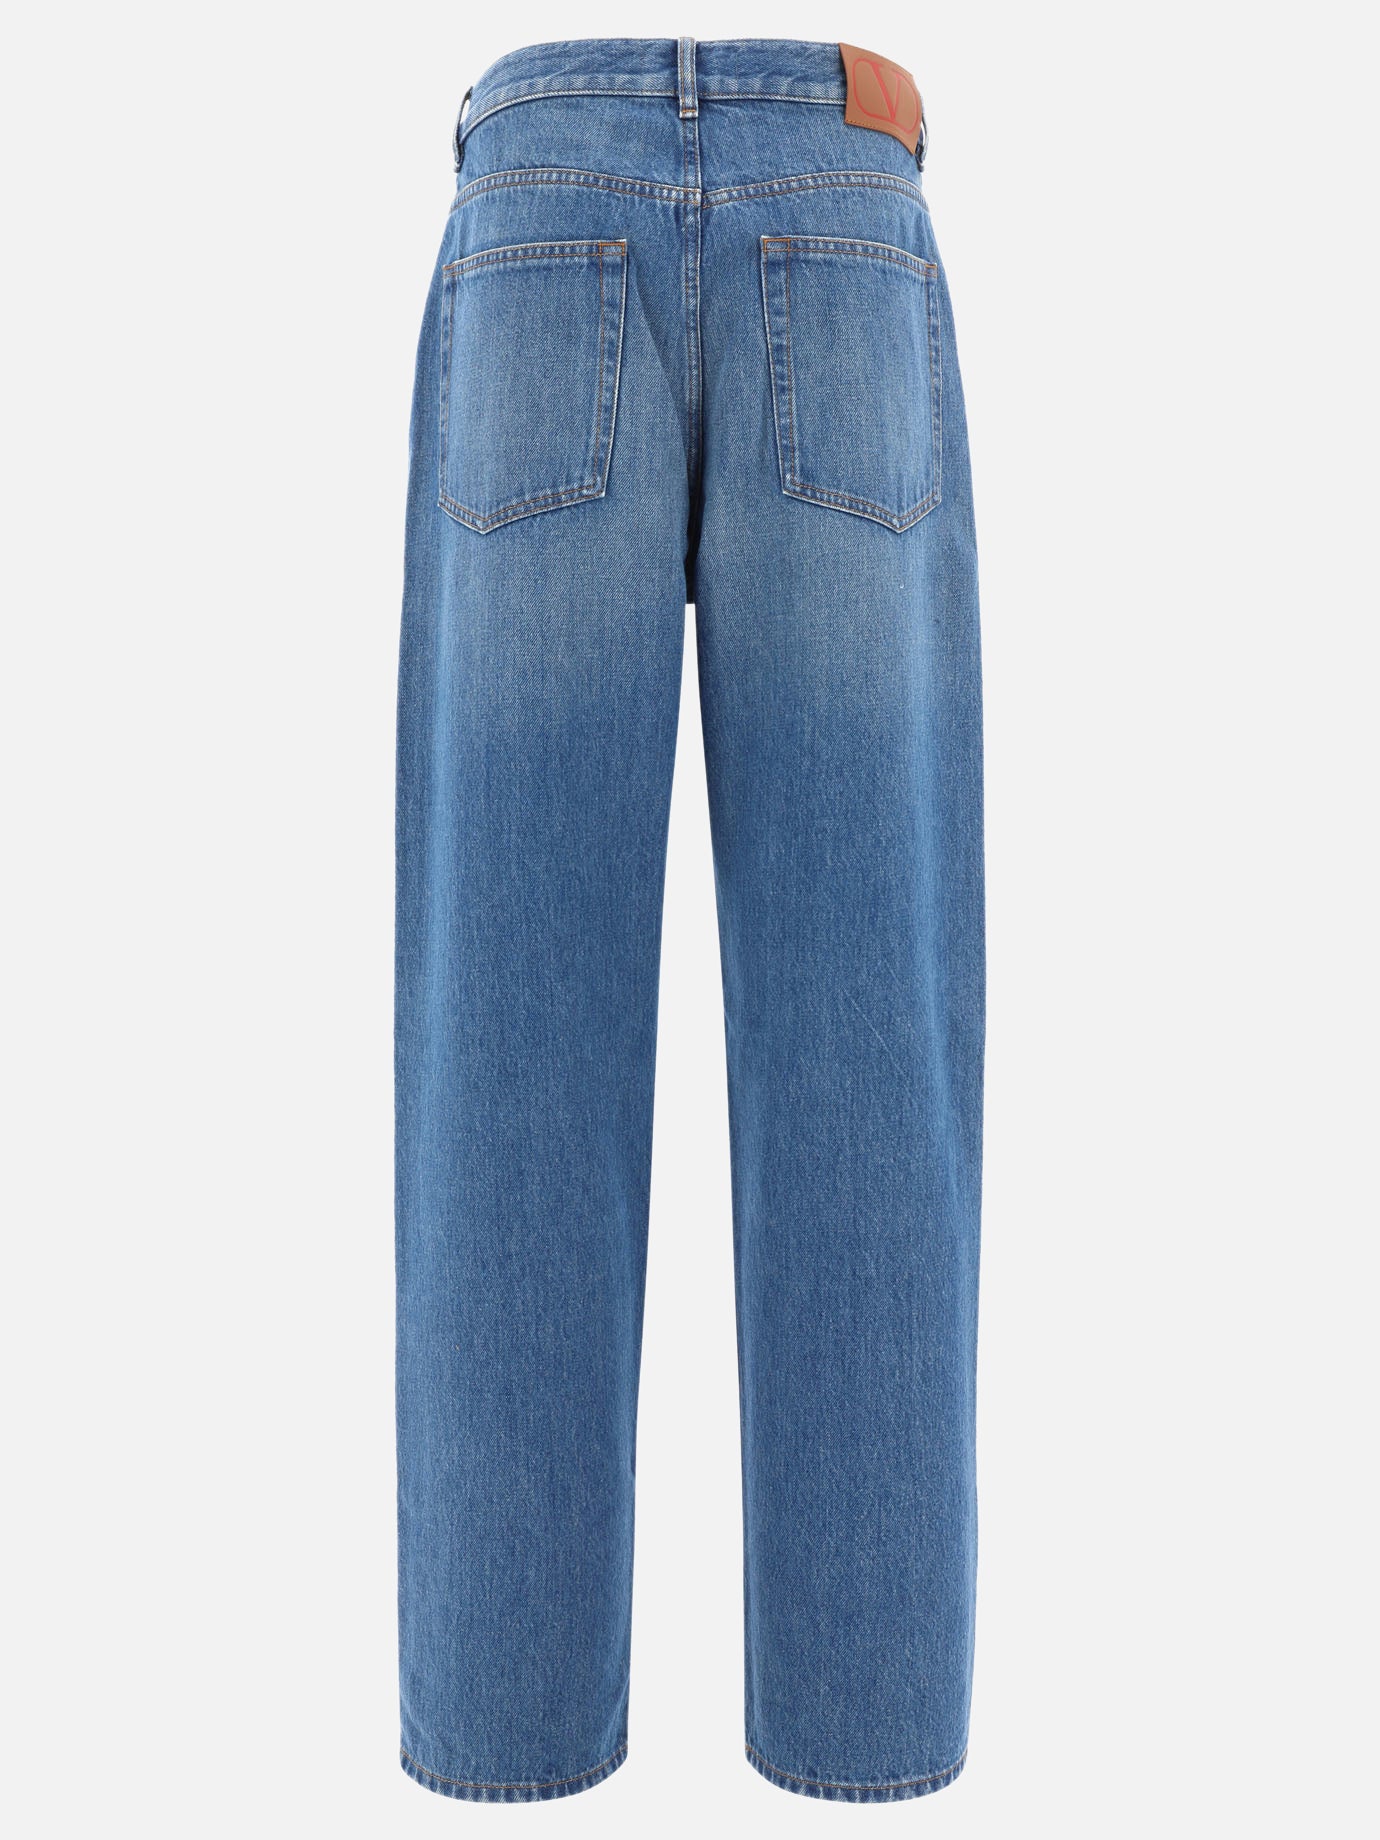 "Medium Blue" jeans